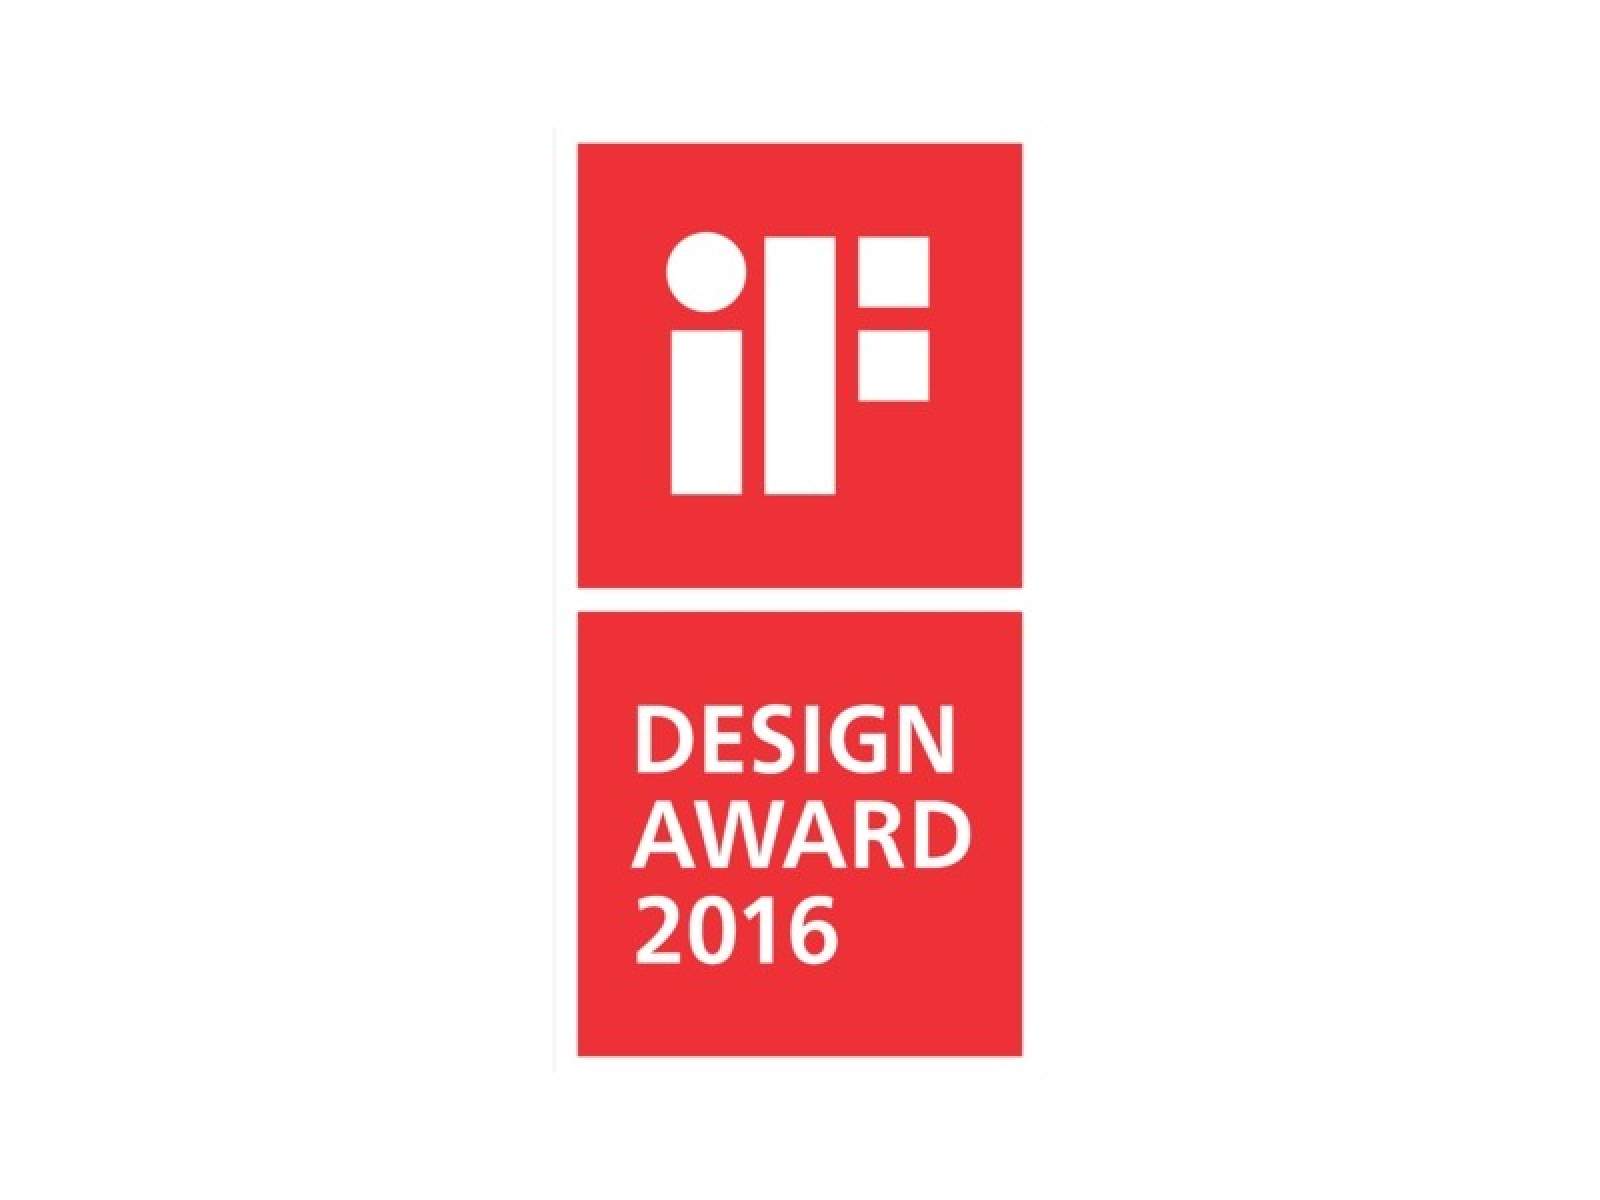 If design award 2016